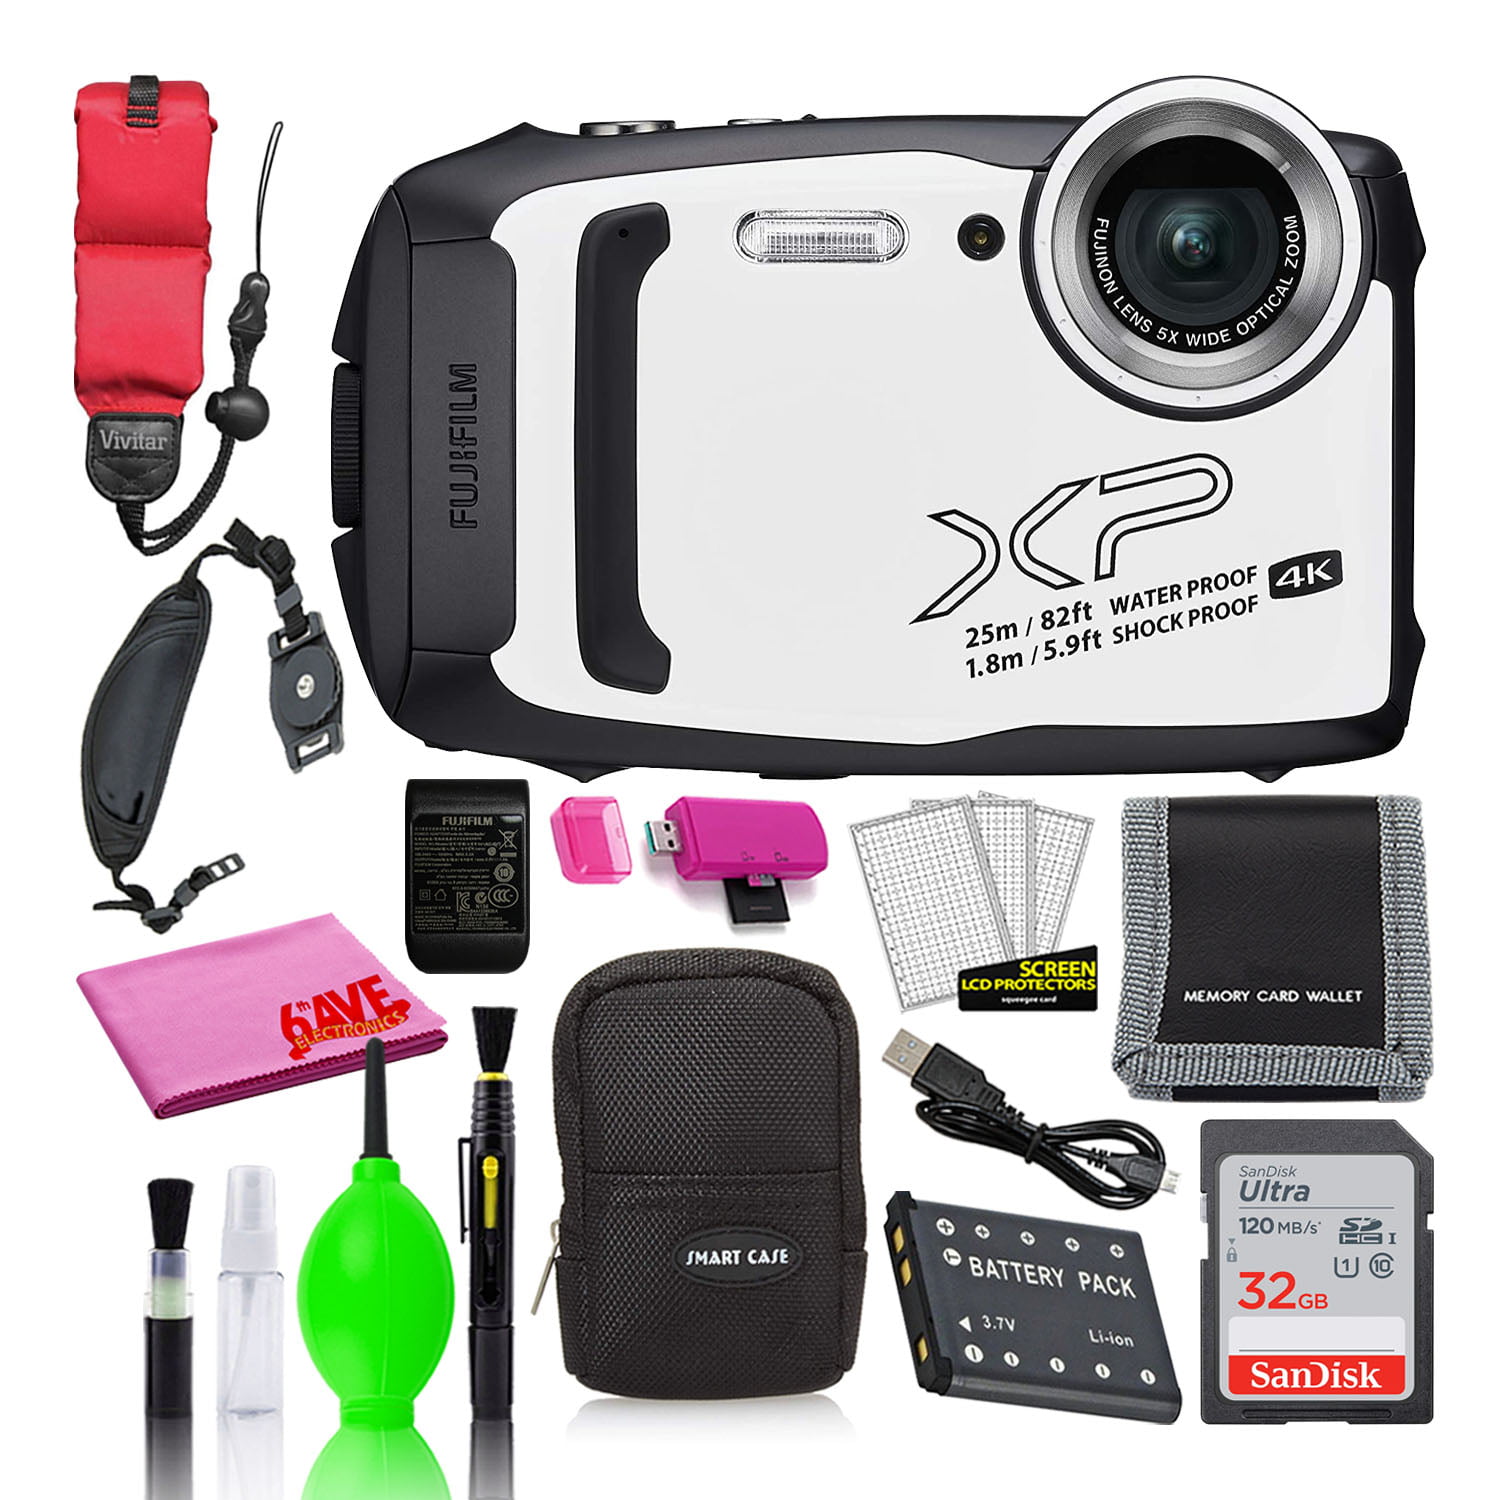 Yellow & SDXC 64GB UHS-I Class10 Pro Memory Card 95 MB/s Read Fujifilm FinePix XP140 Compact Digital Camera